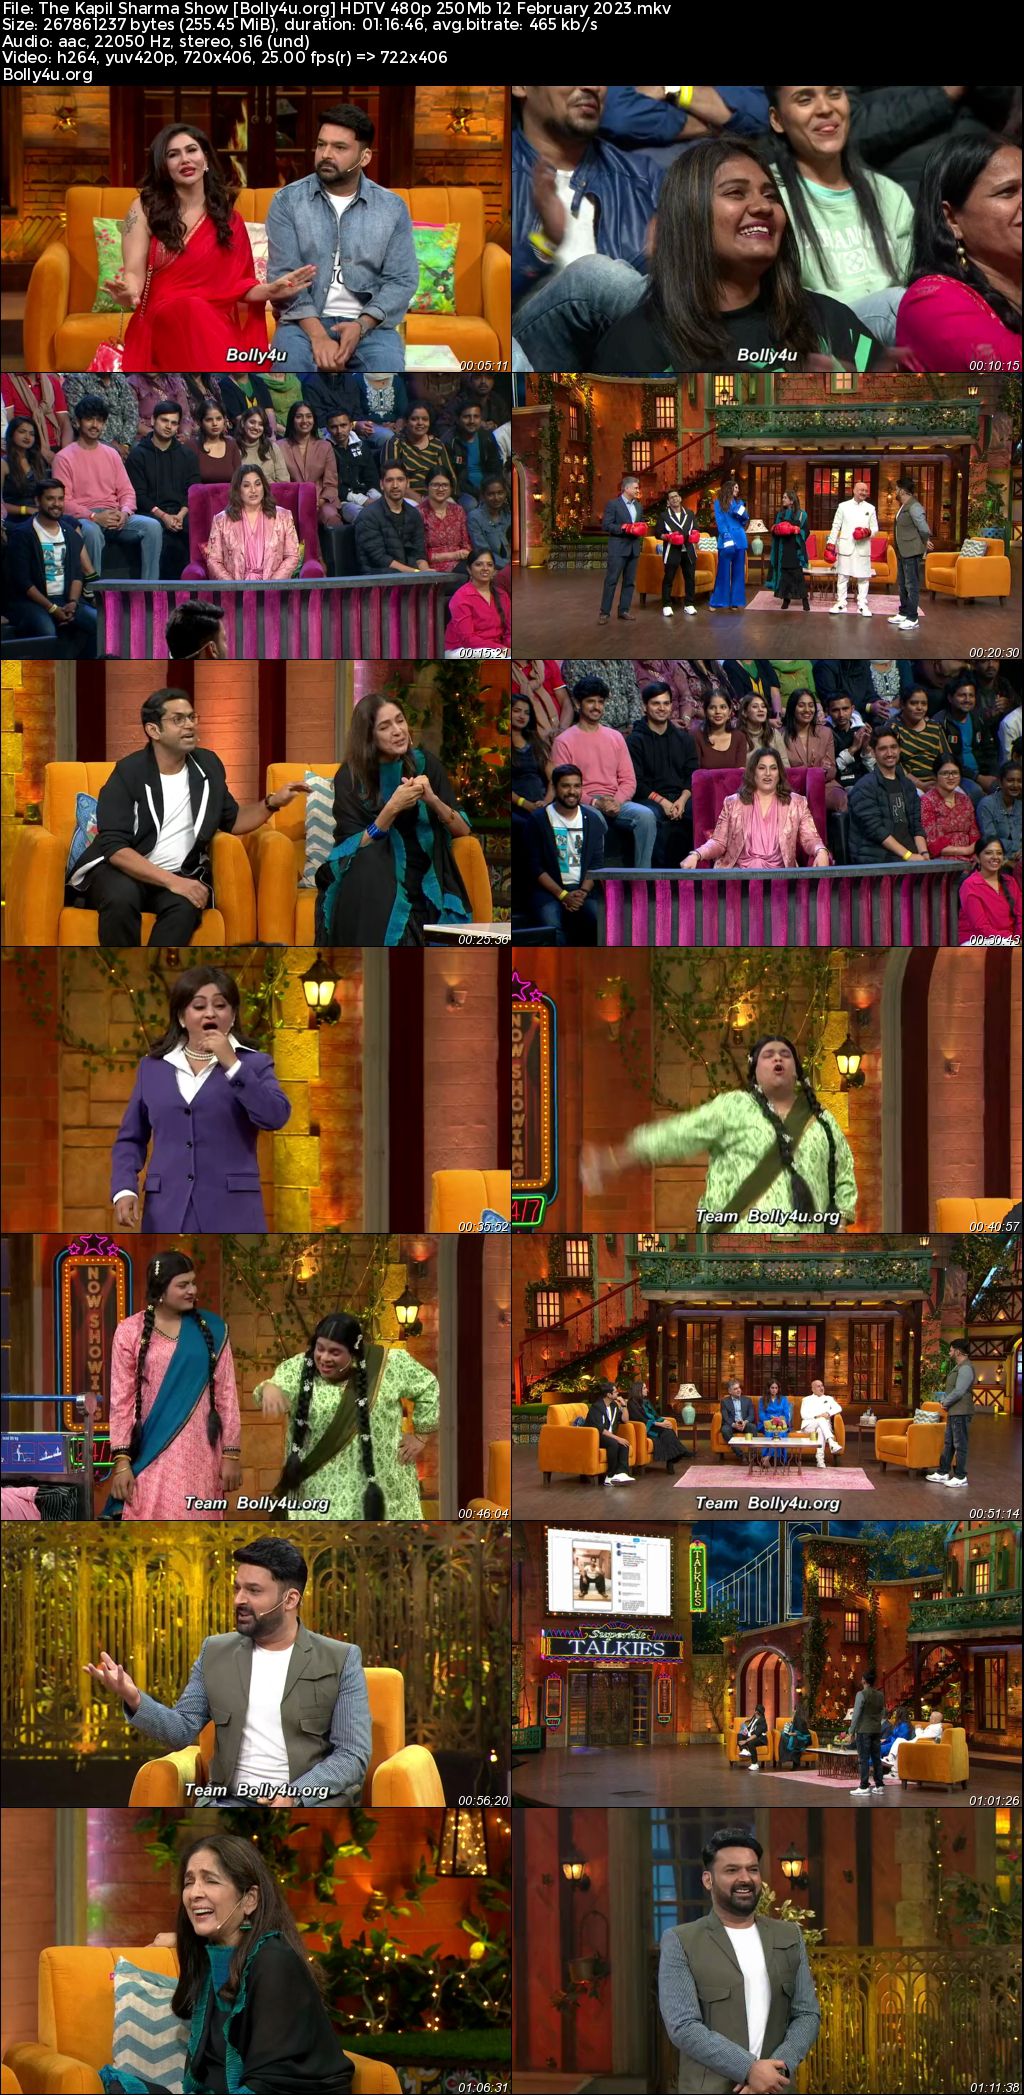 The Kapil Sharma Show HDTV 480p 250Mb 12 February 2023 Download